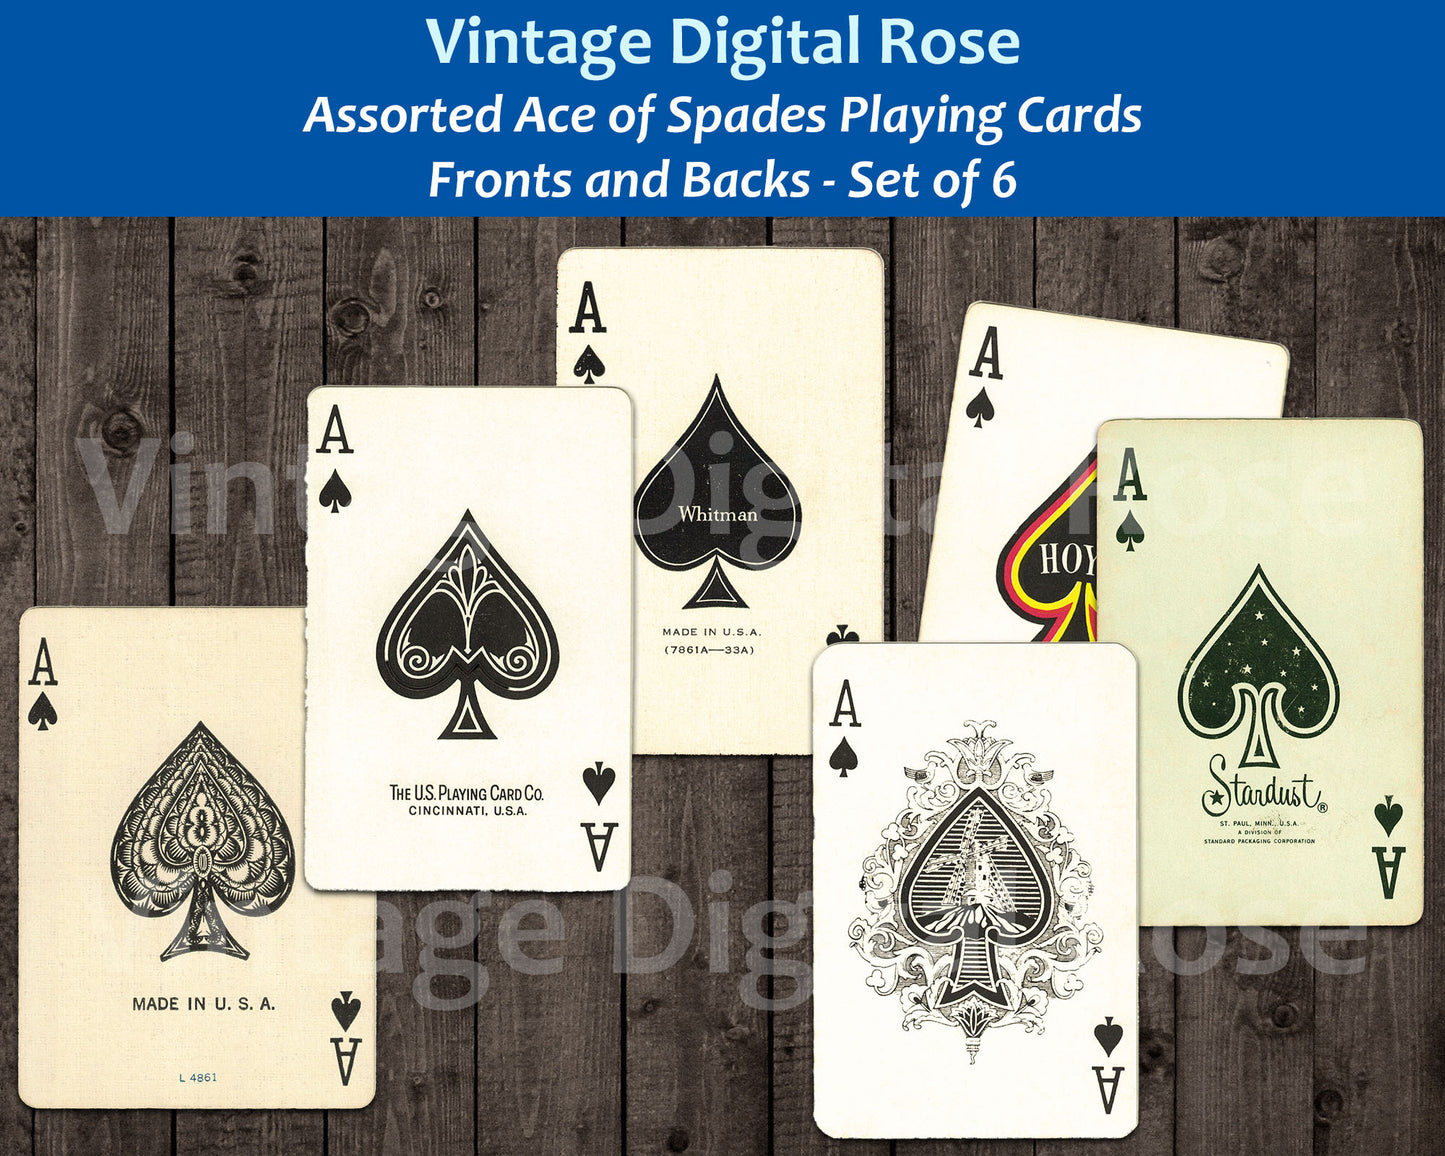 Vintage Printable Ace of Spades Playing Cards Fronts and Backs Digital Collage Sheet PNG JPG Format Set of 6 Cards Vintage Game Ephemera